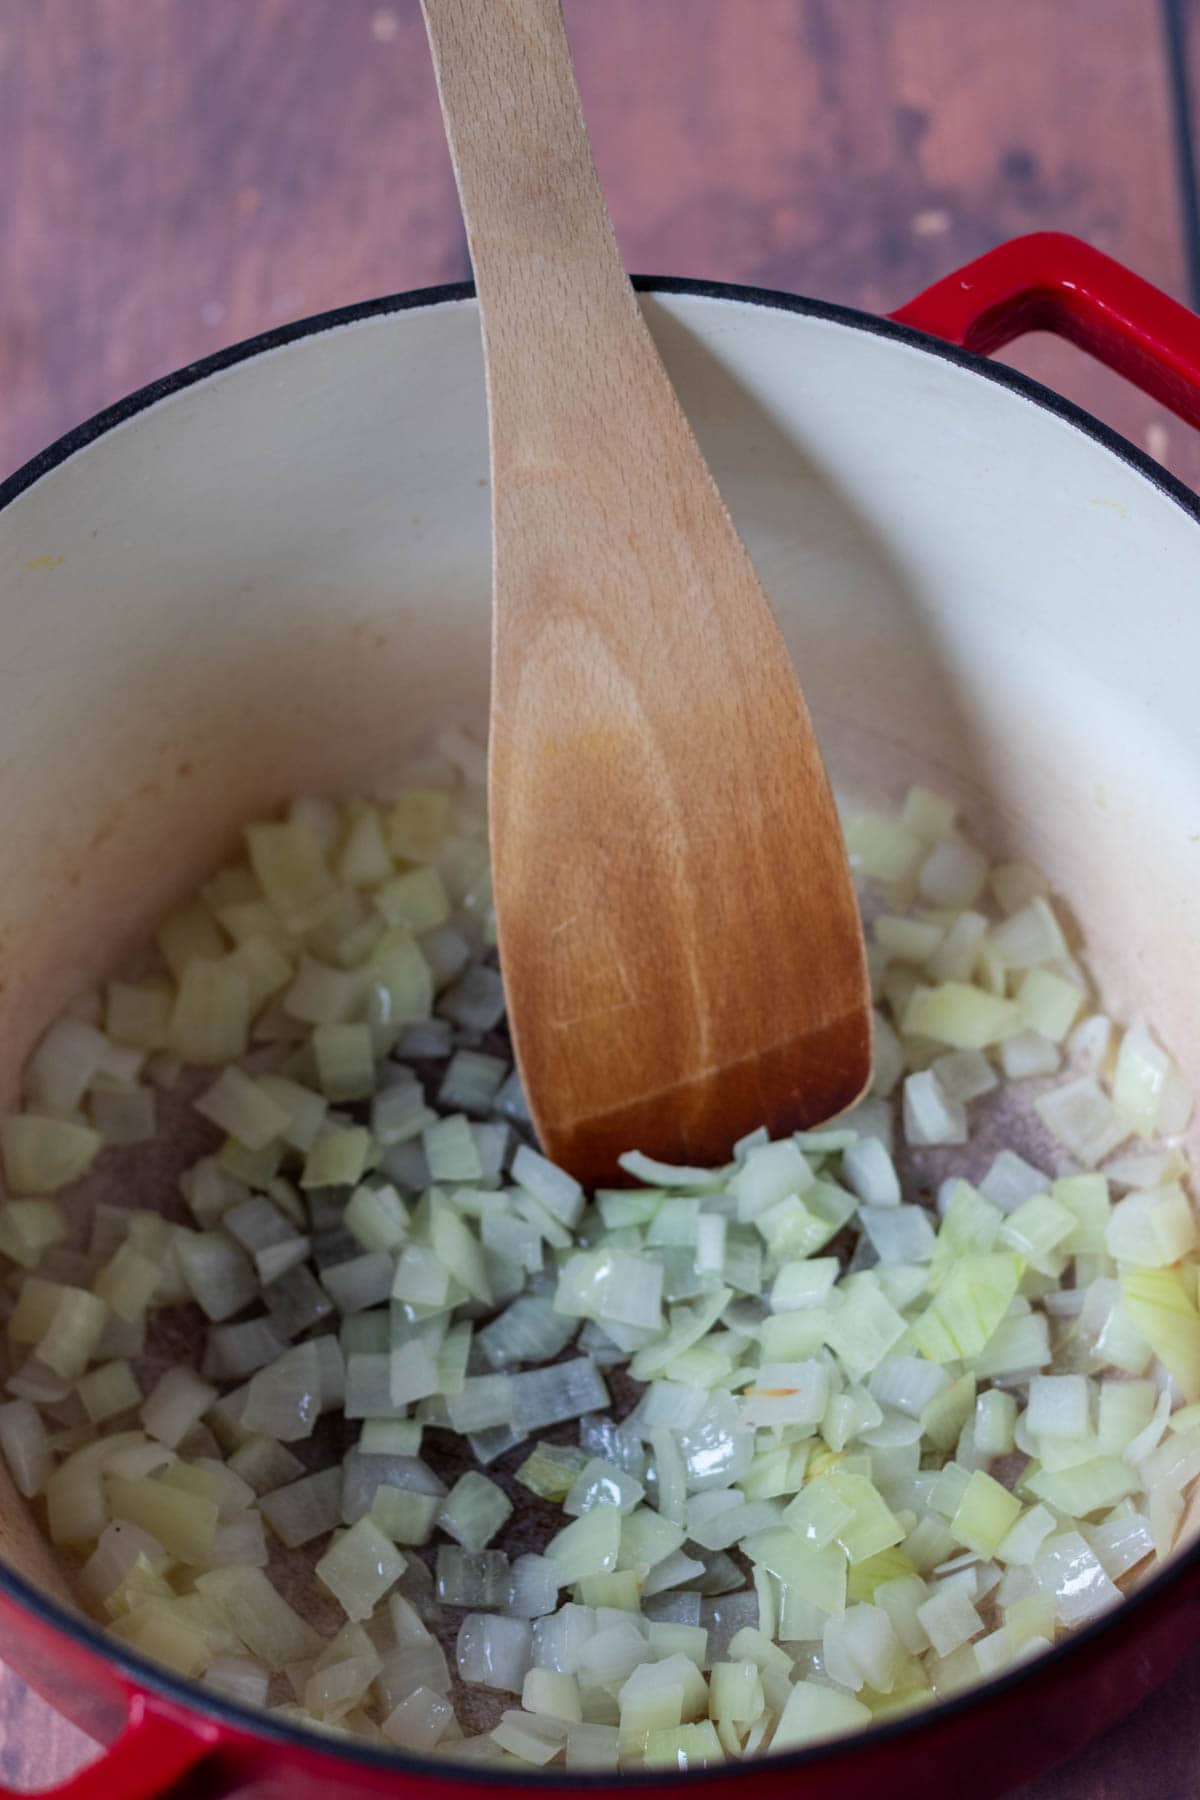 Onion sautéd in a large pan.